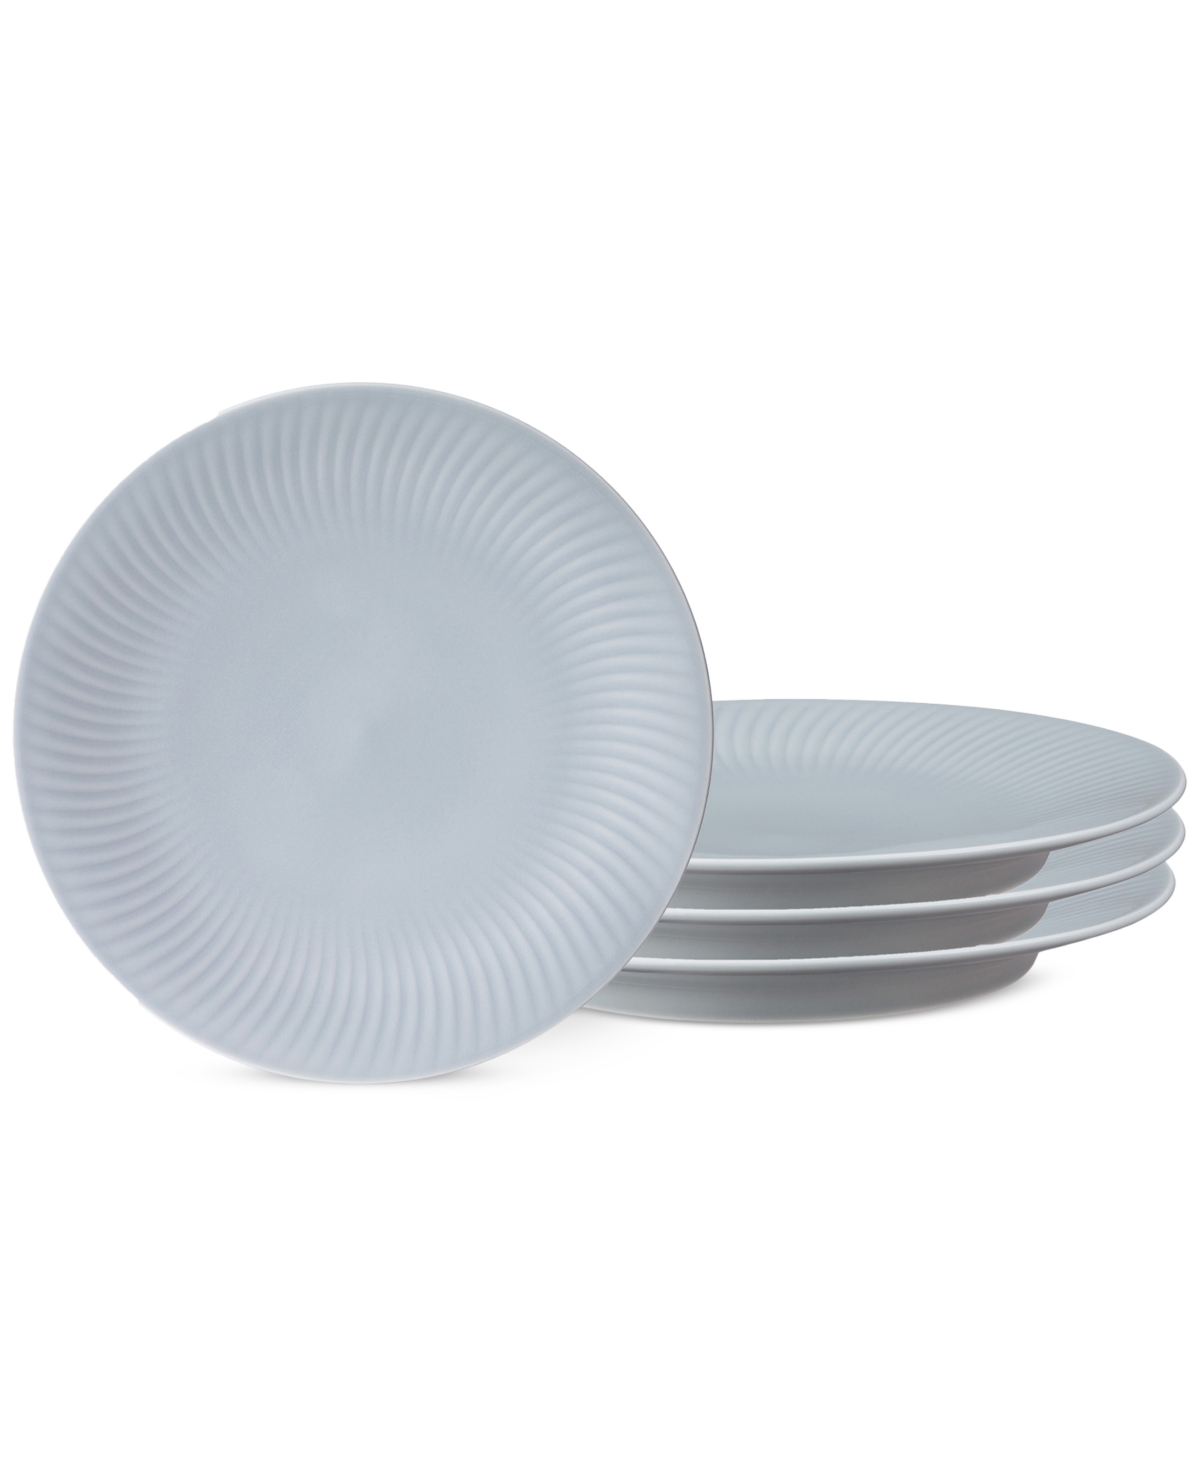 Arc Collection Porcelain Medium Plates, Set of 4 - Light Grey